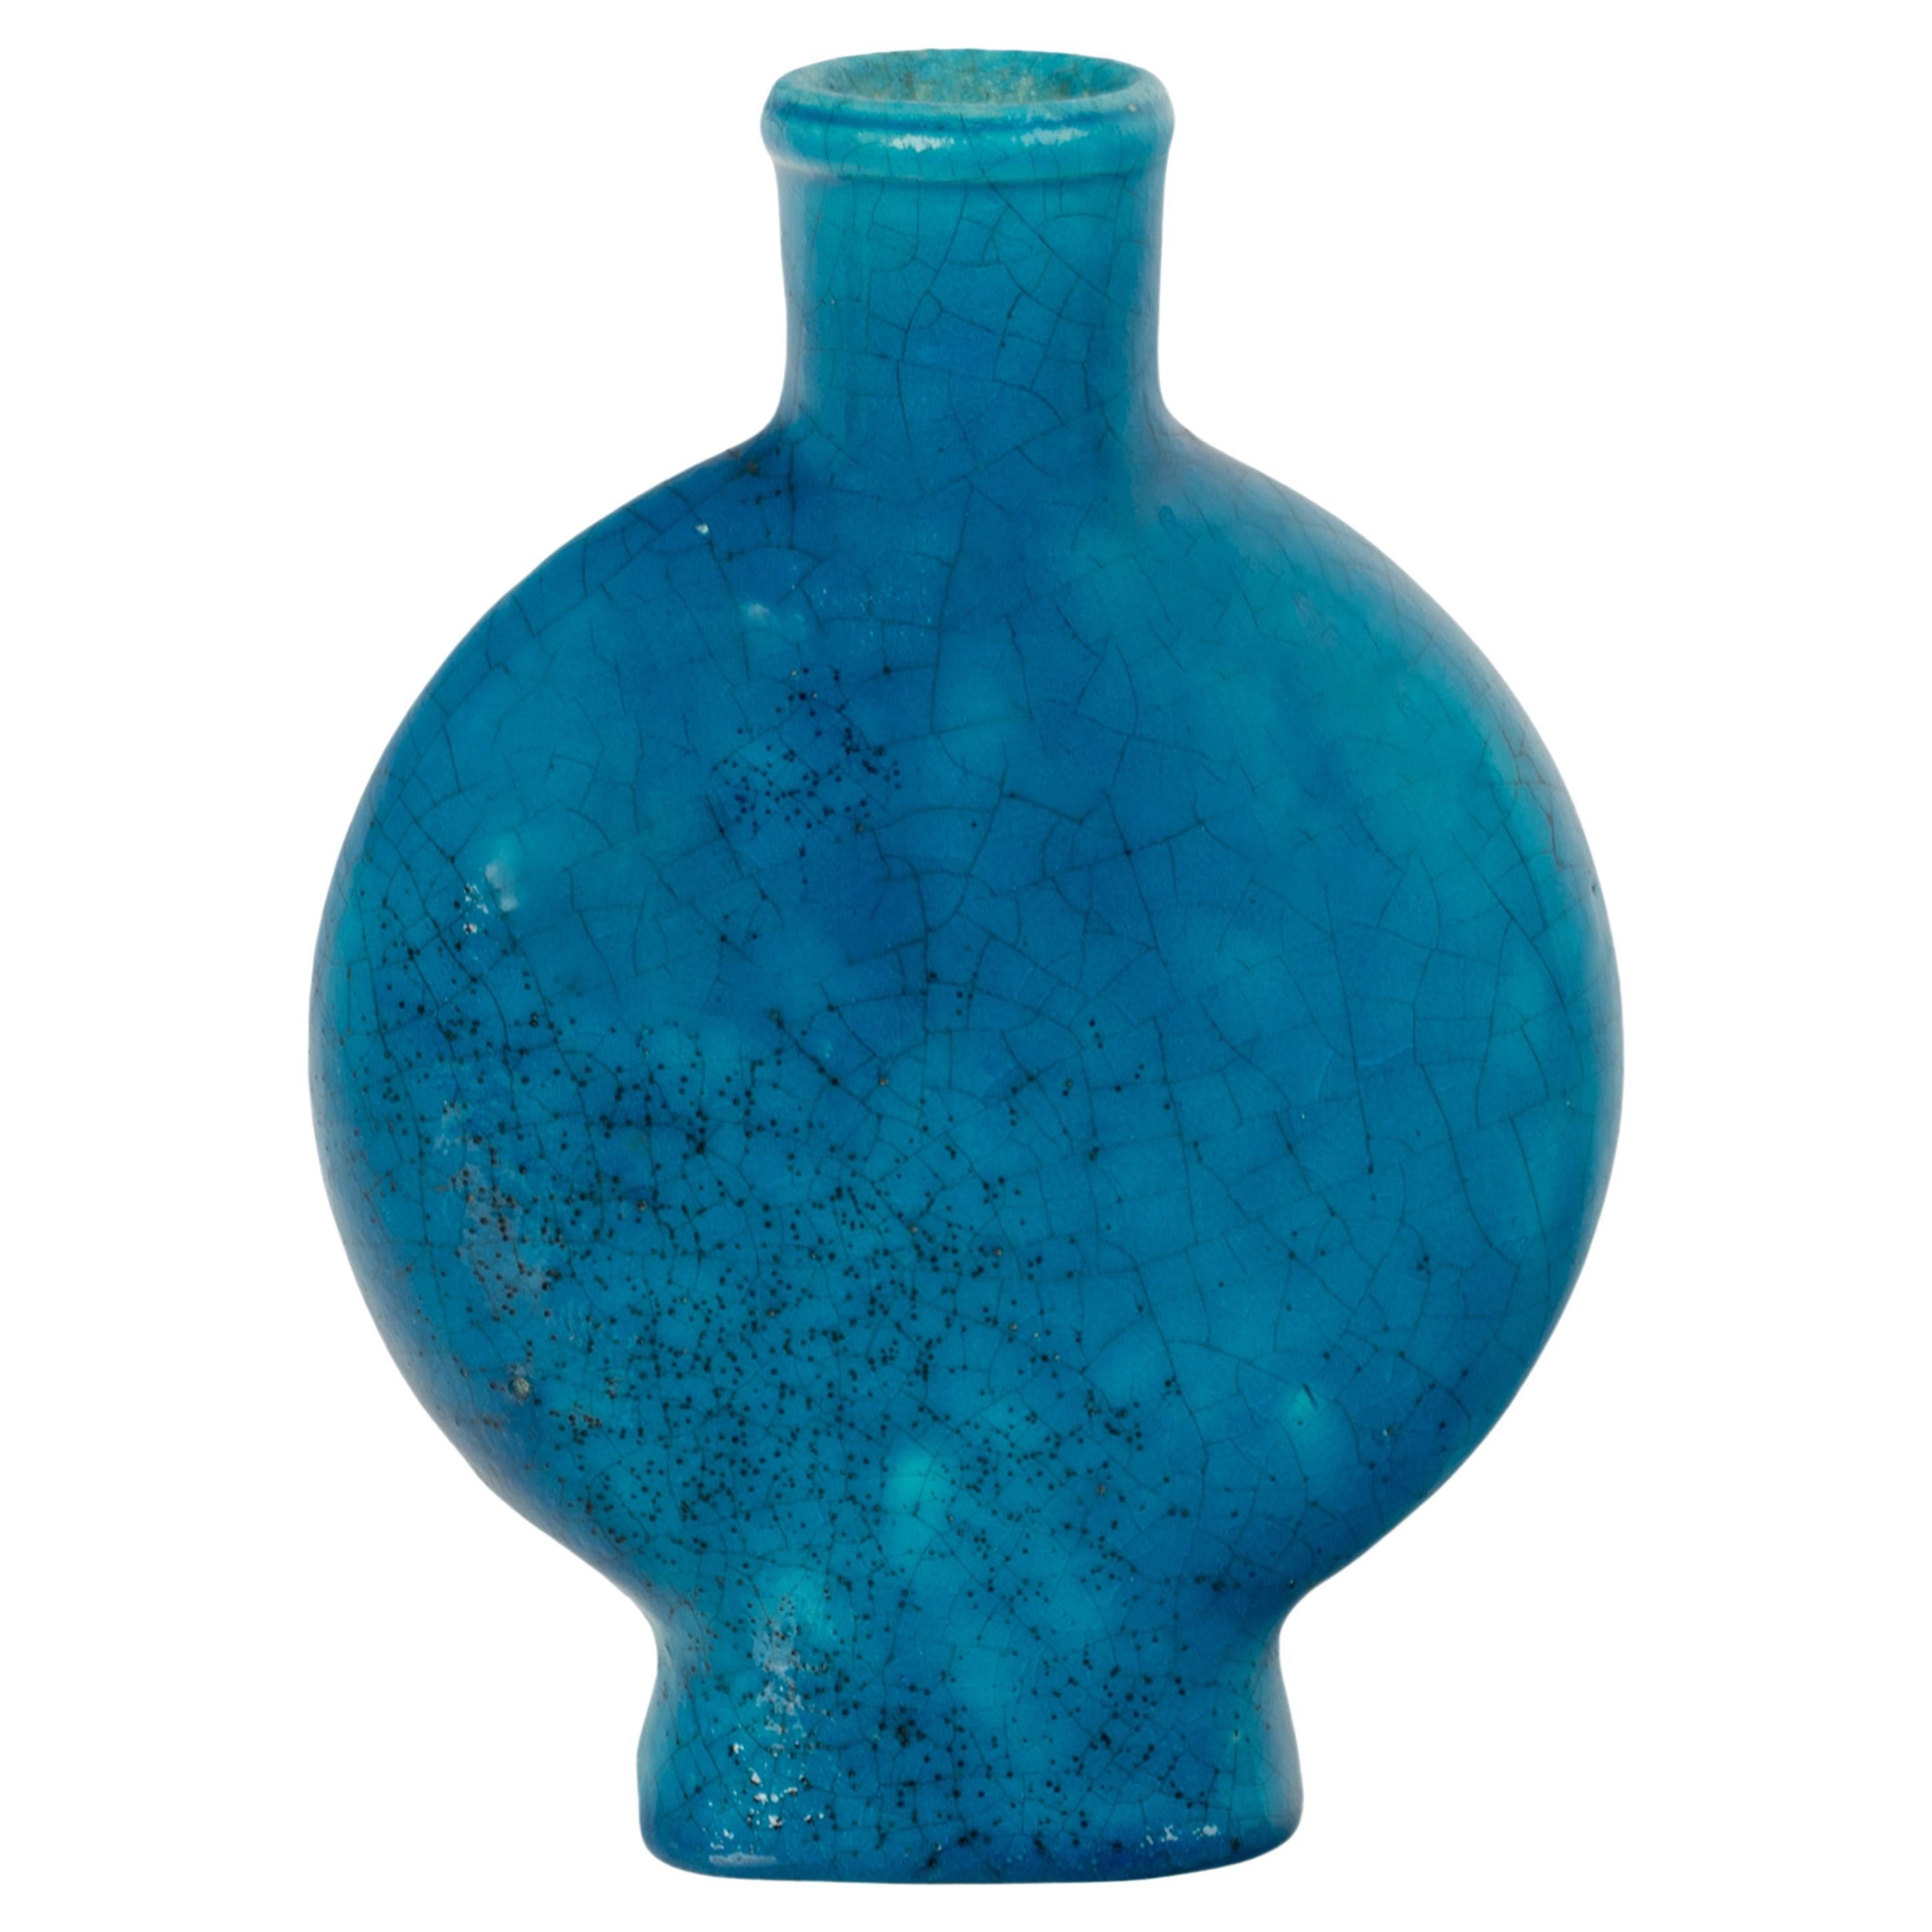 Antique French Art Deco Turquoise Blue Pottery Vase Edmond Lachenal Signed 1930